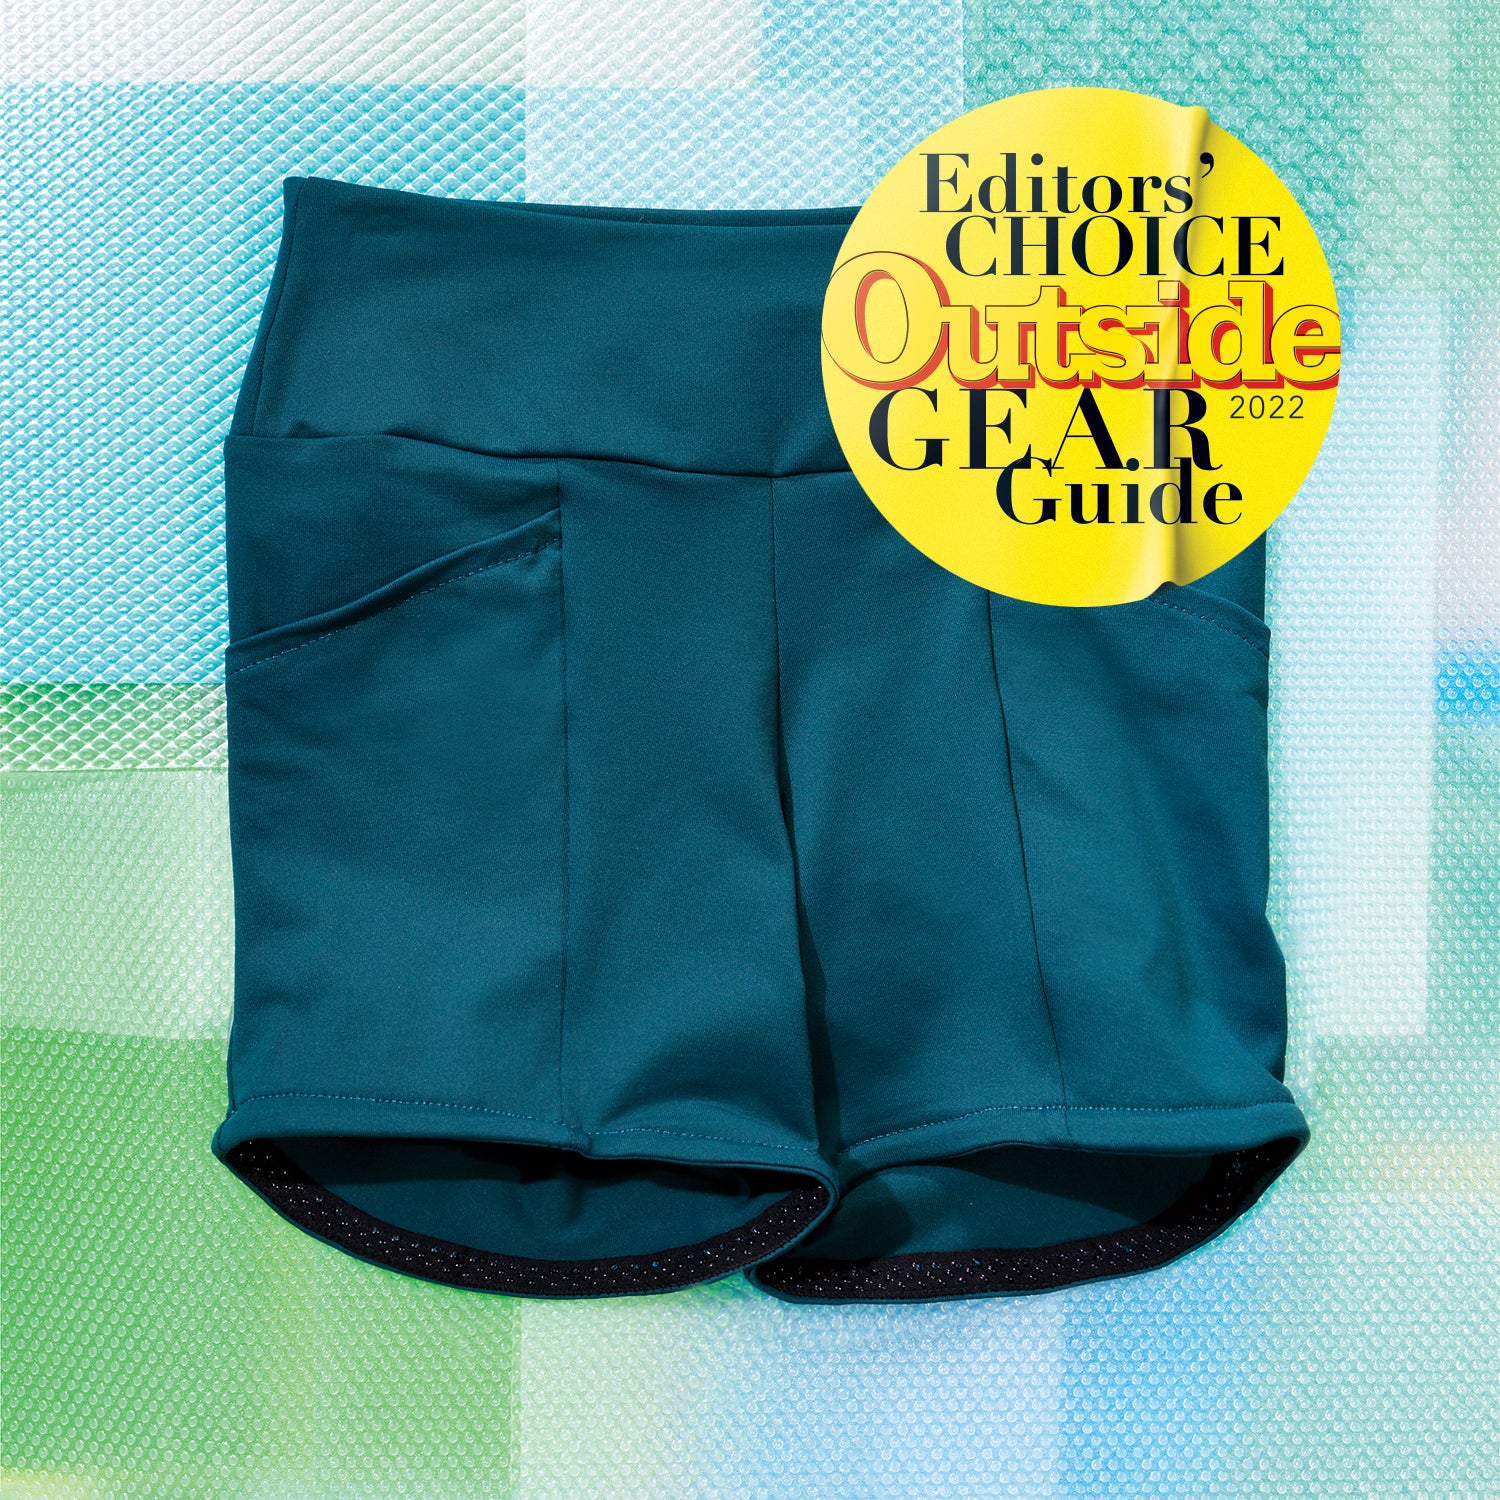 Editor's Choice: Indura Athletic Stay-Put Shorts